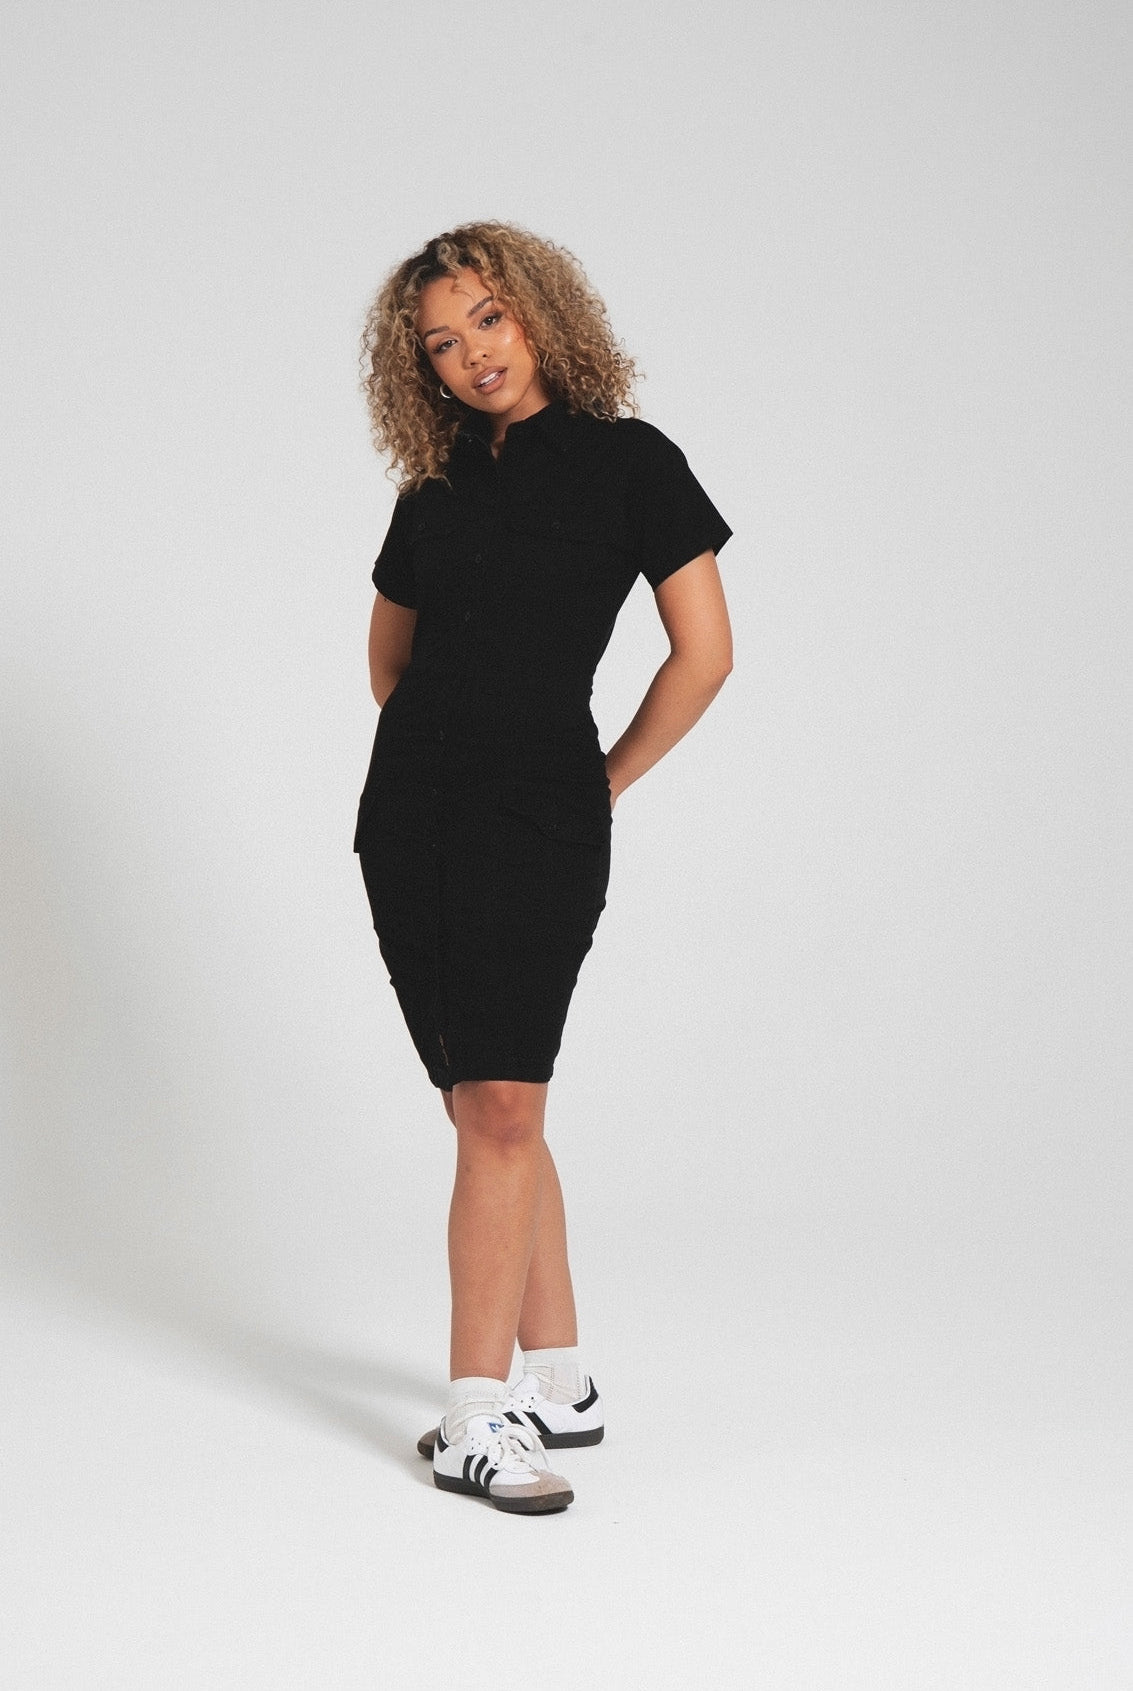 Womens 'PERSE' Dress - BLACK - Shop at www.Bench.co.uk #LoveMyHood